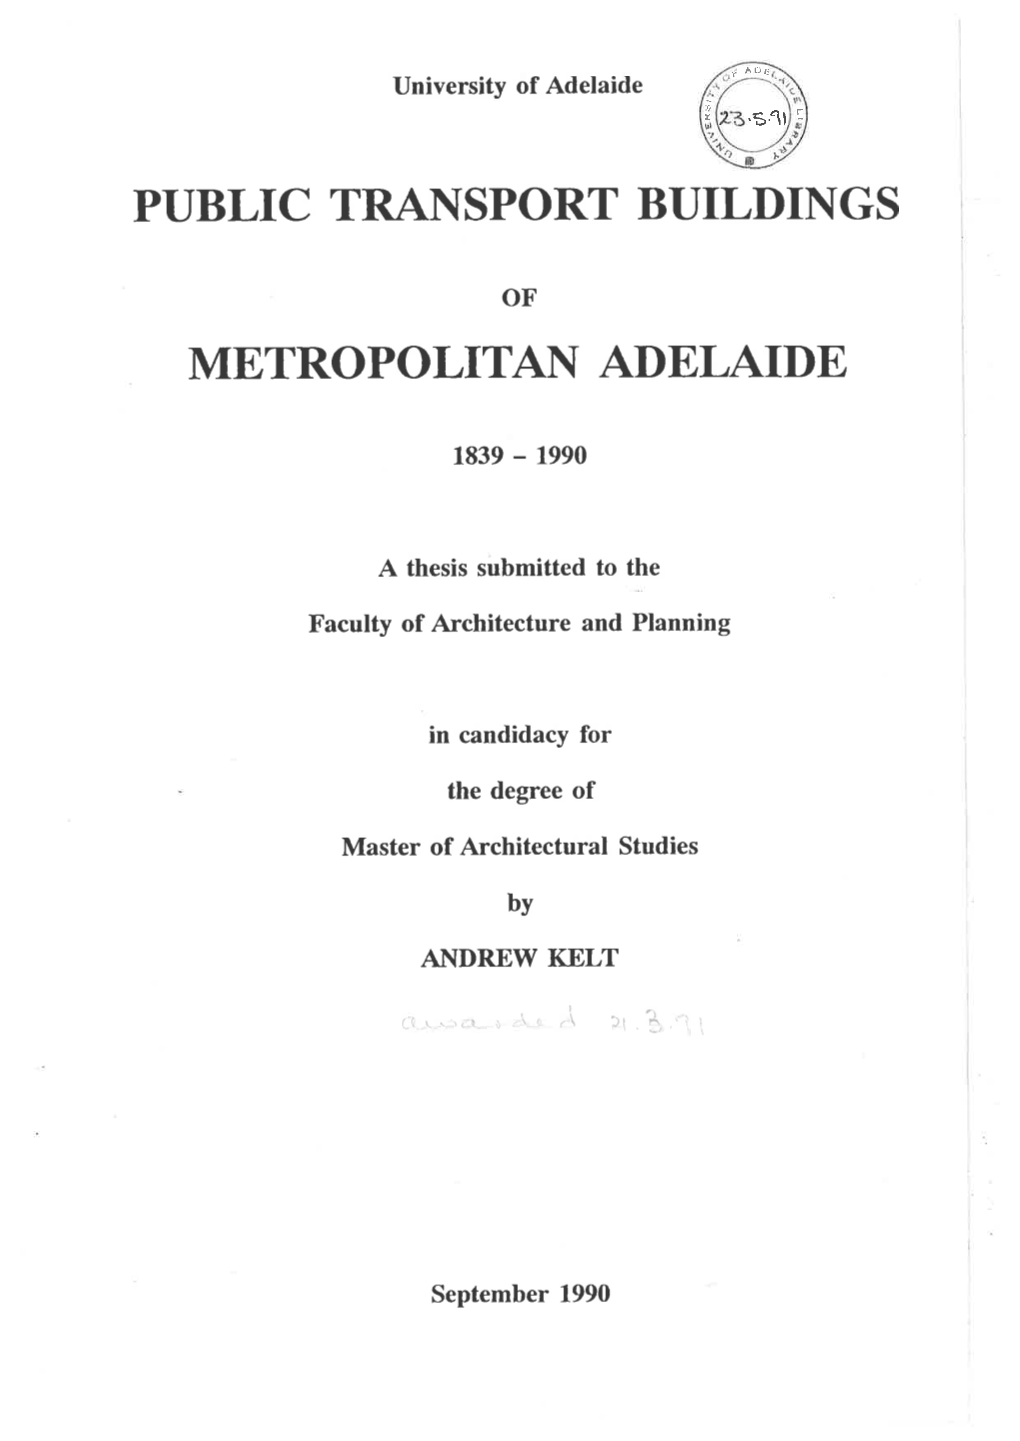 Public Transport Buildings of Metropolitan Adelaide